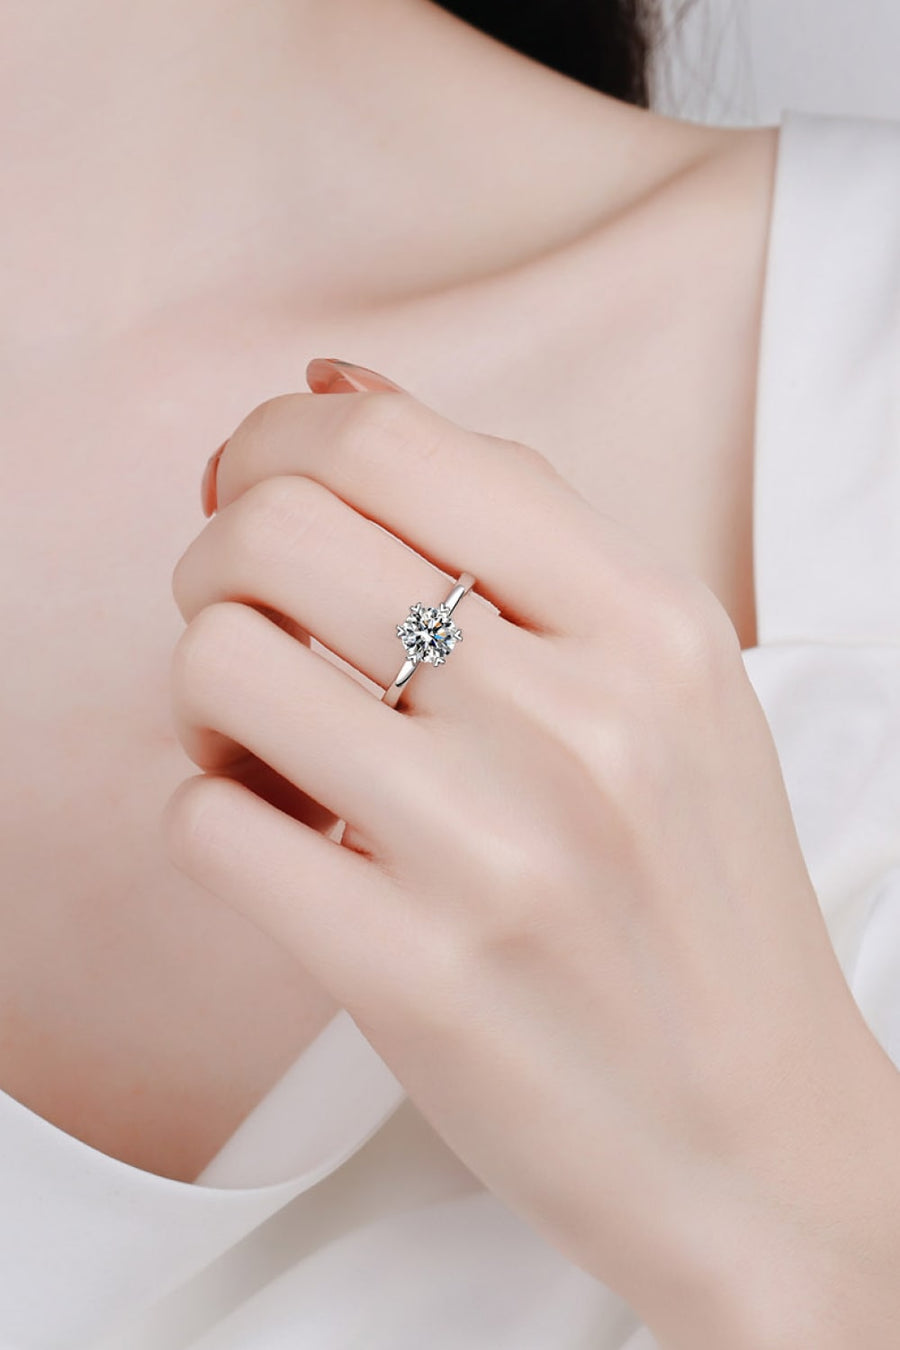 Best Diamond Ring Jewelry Gifts for Women | 1 Carat Round Diamond Ring - Pleasant Surprise | MASON New York